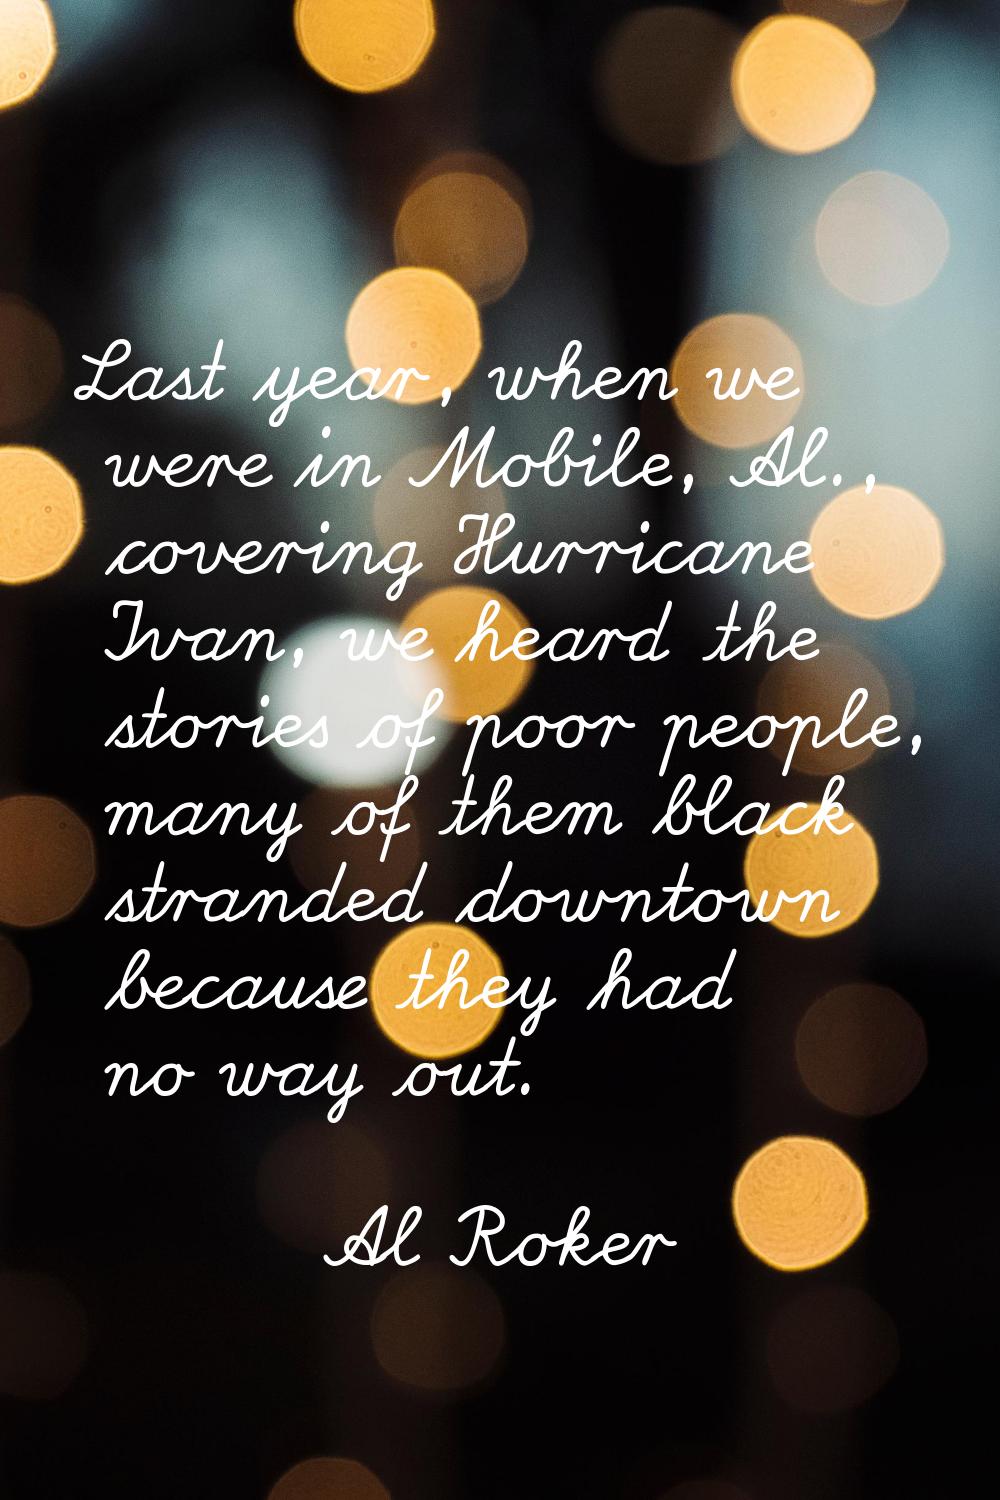 Last year, when we were in Mobile, Al., covering Hurricane Ivan, we heard the stories of poor peopl